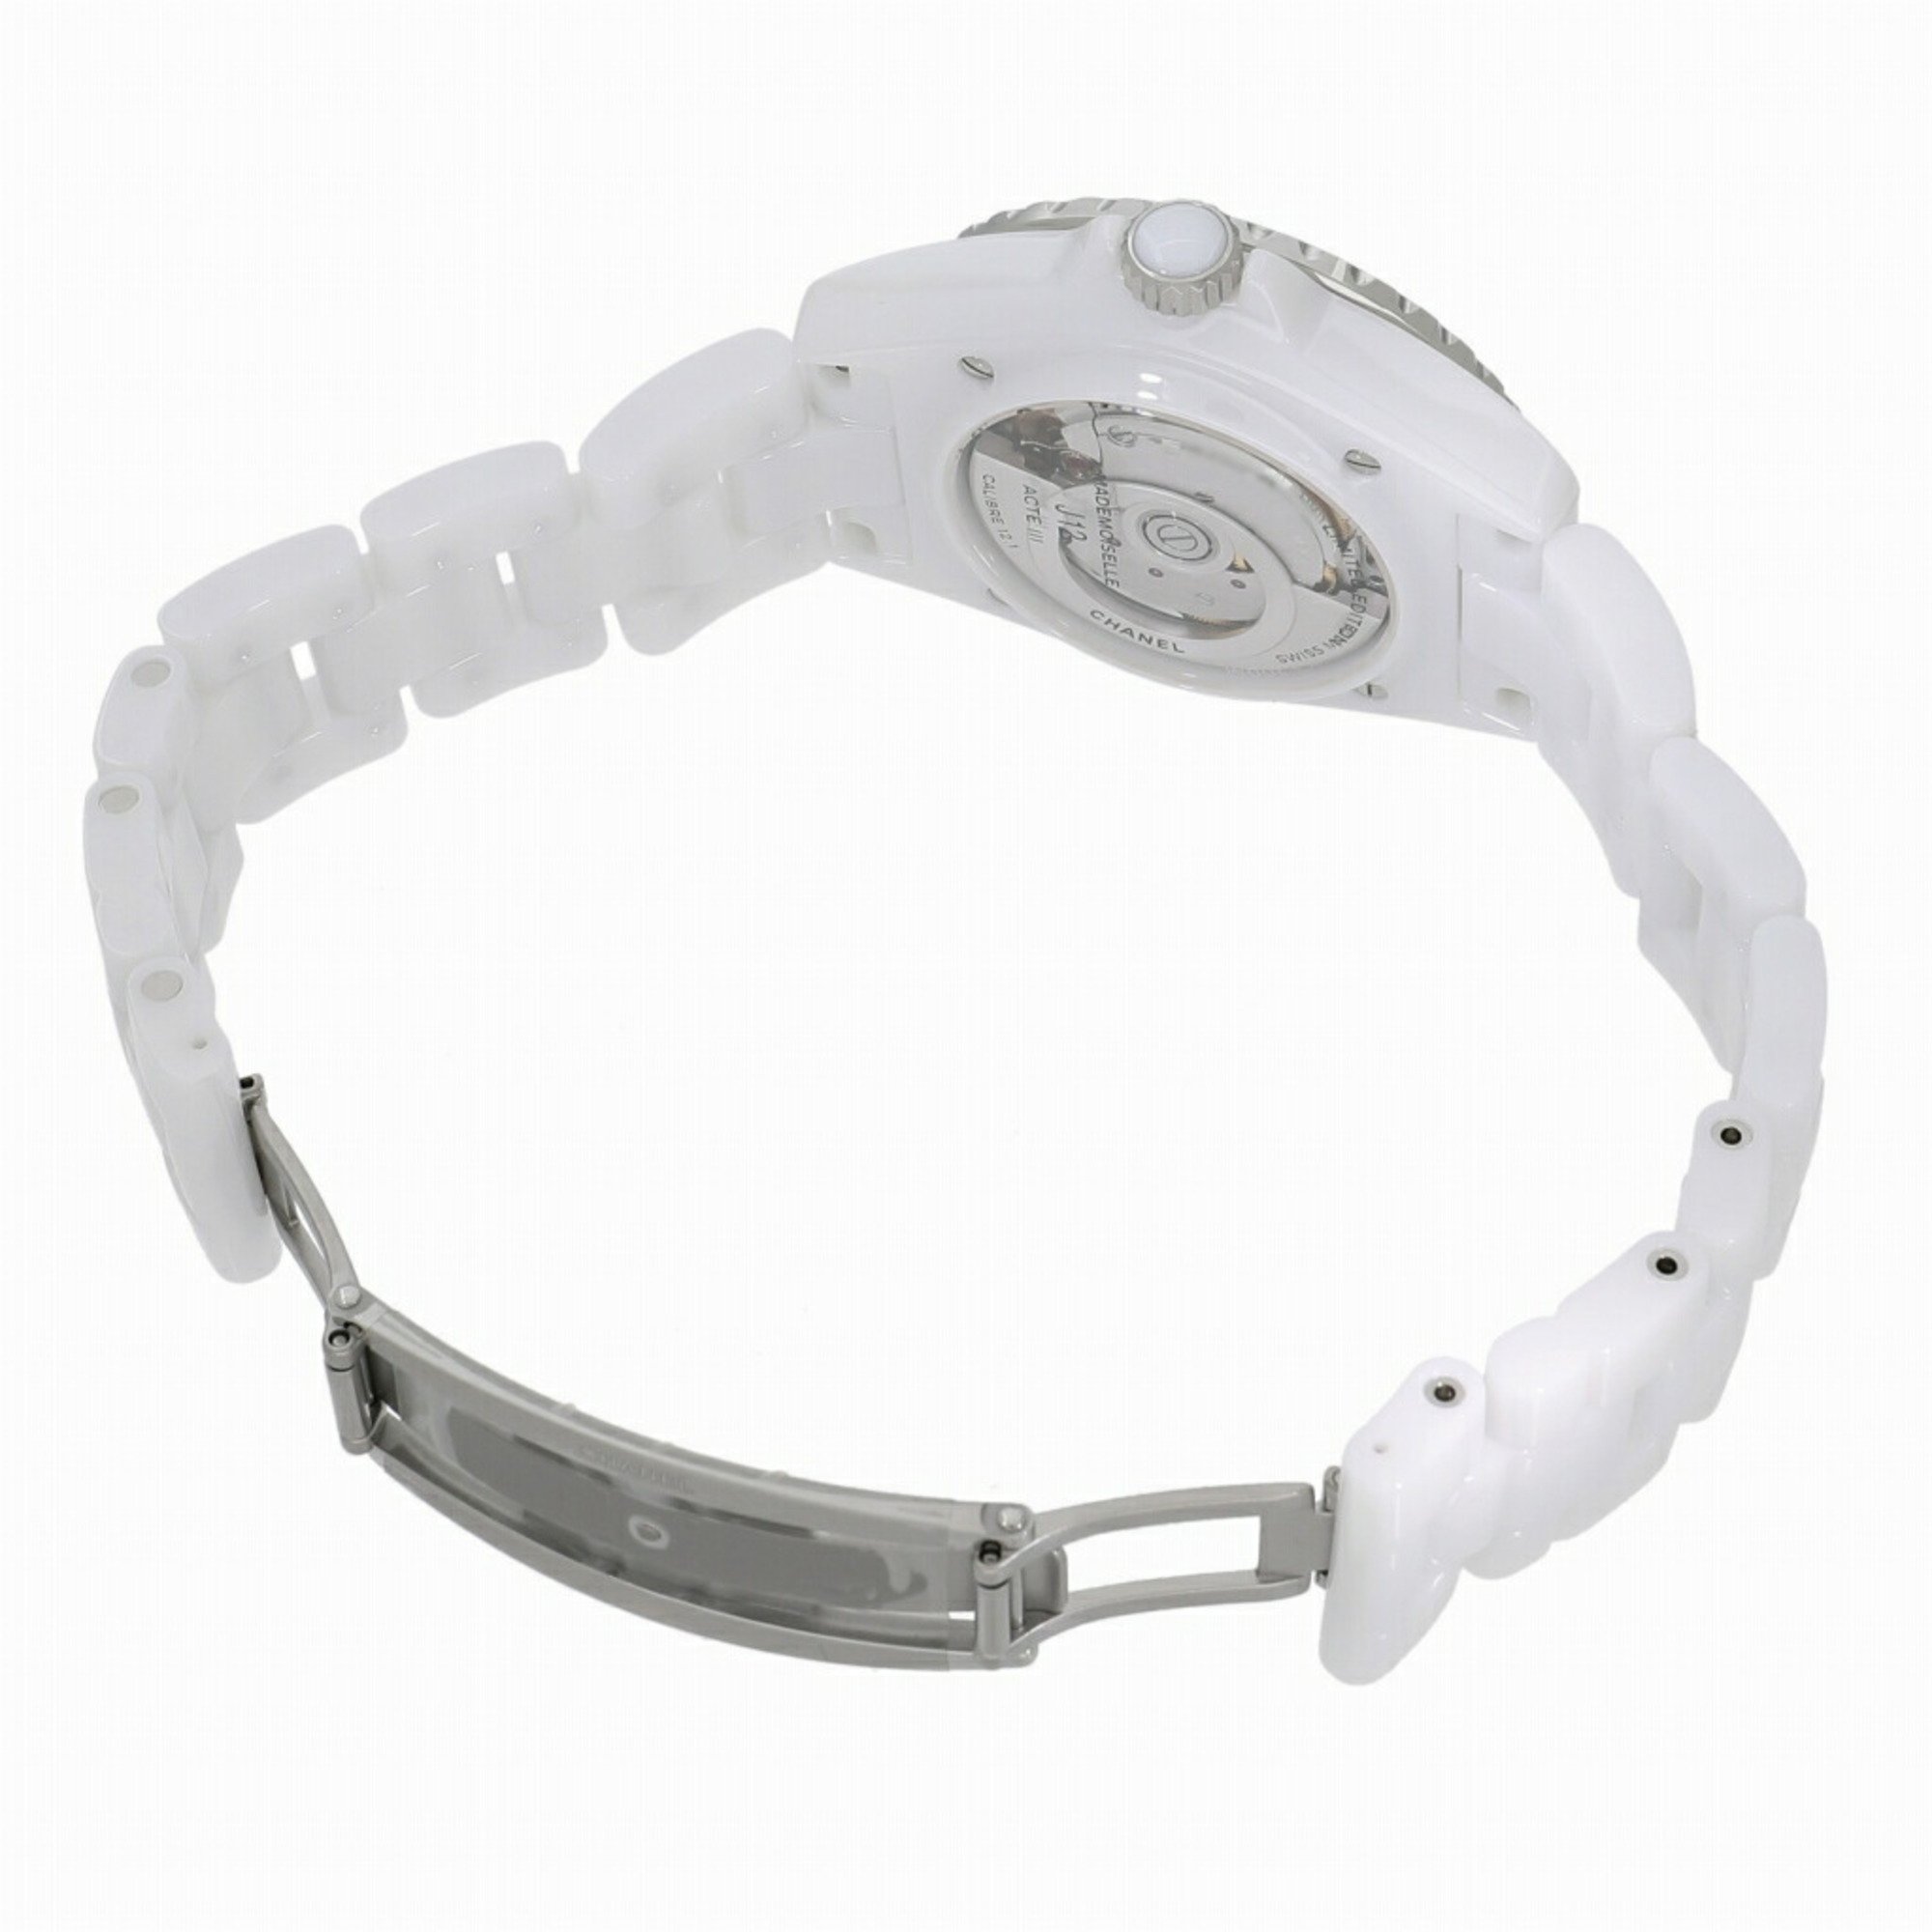 Chanel Mademoiselle J12 Rapausa 38MM H7481 White Unisex Watch